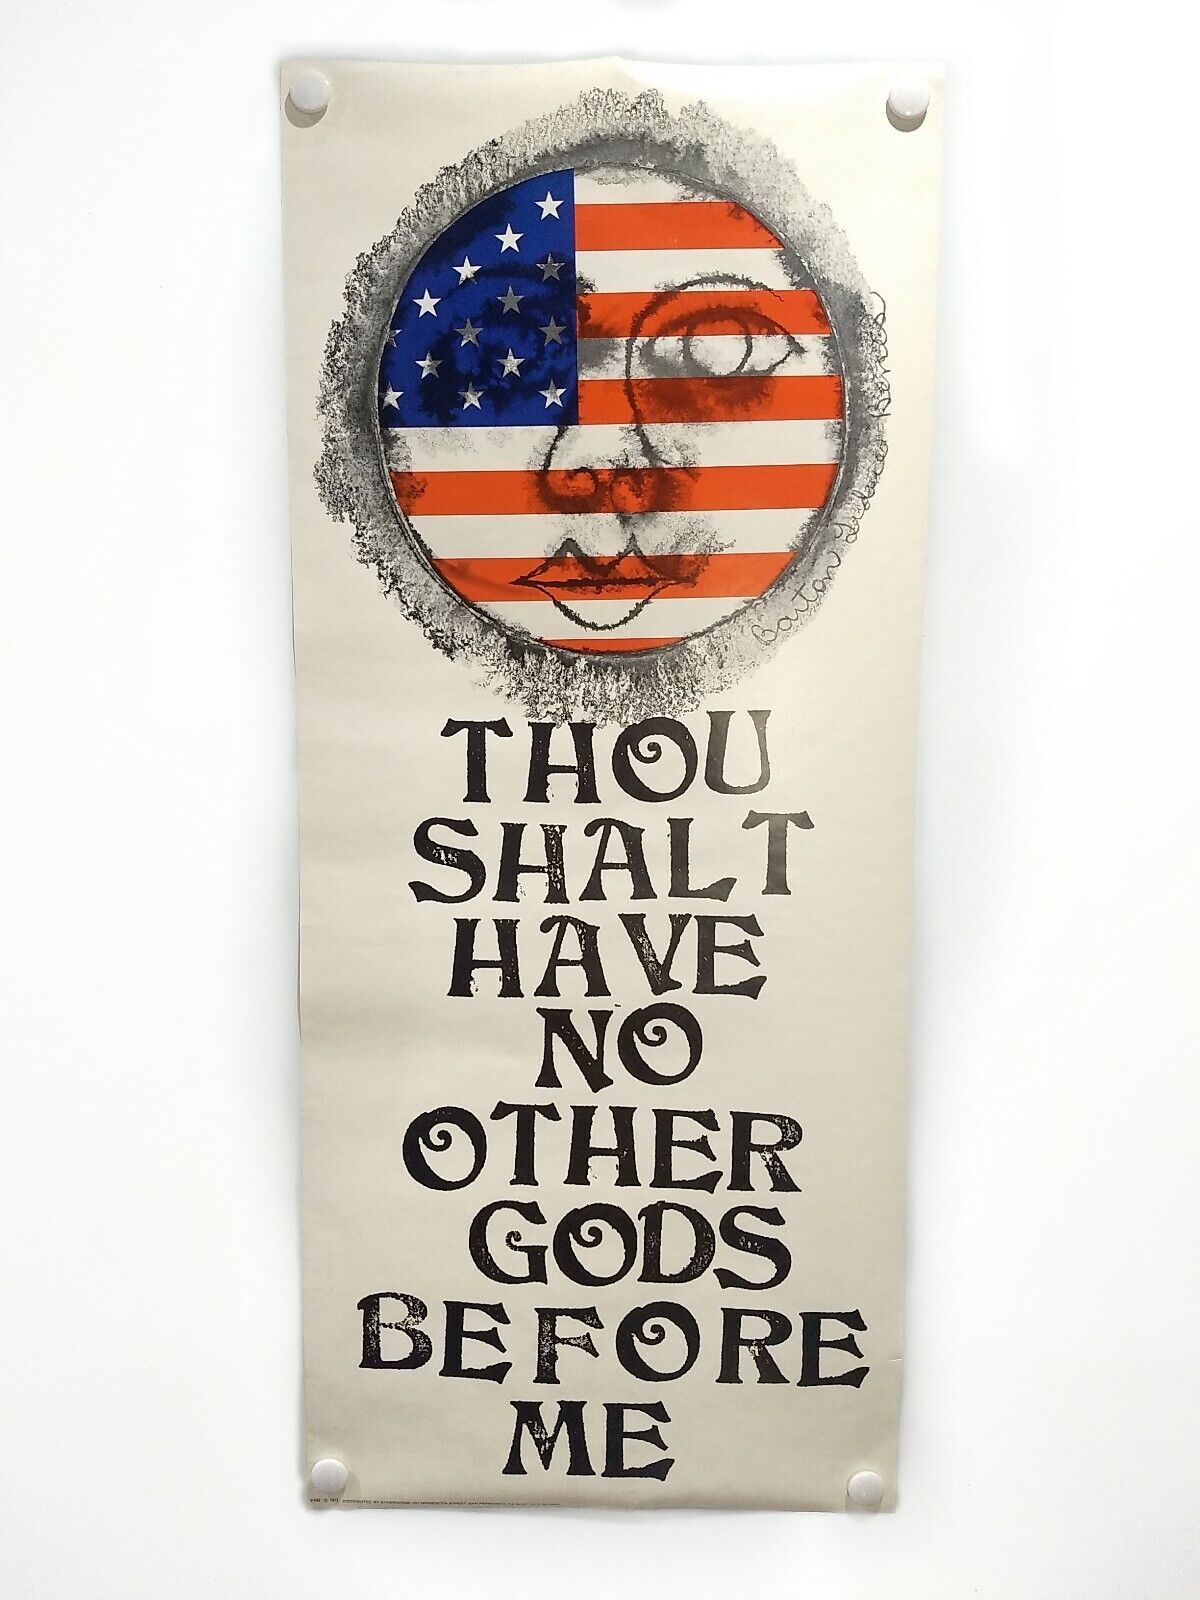 Barton Lidice Benes - 1971 Political Activism Christian American satire poster